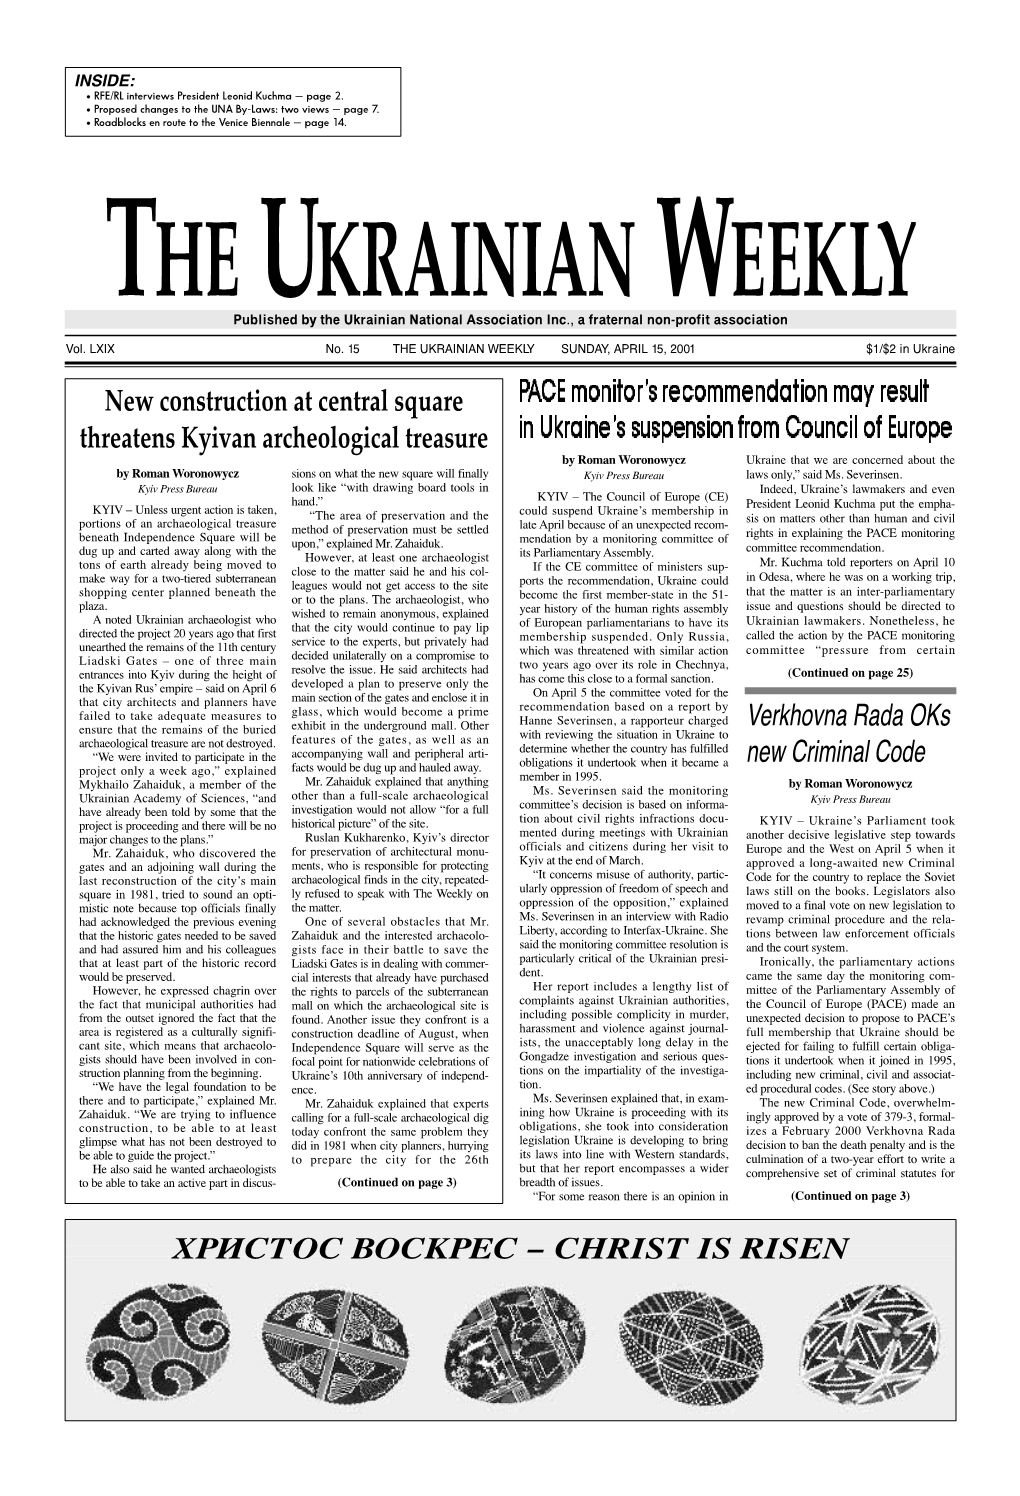 The Ukrainian Weekly 2001, No.15